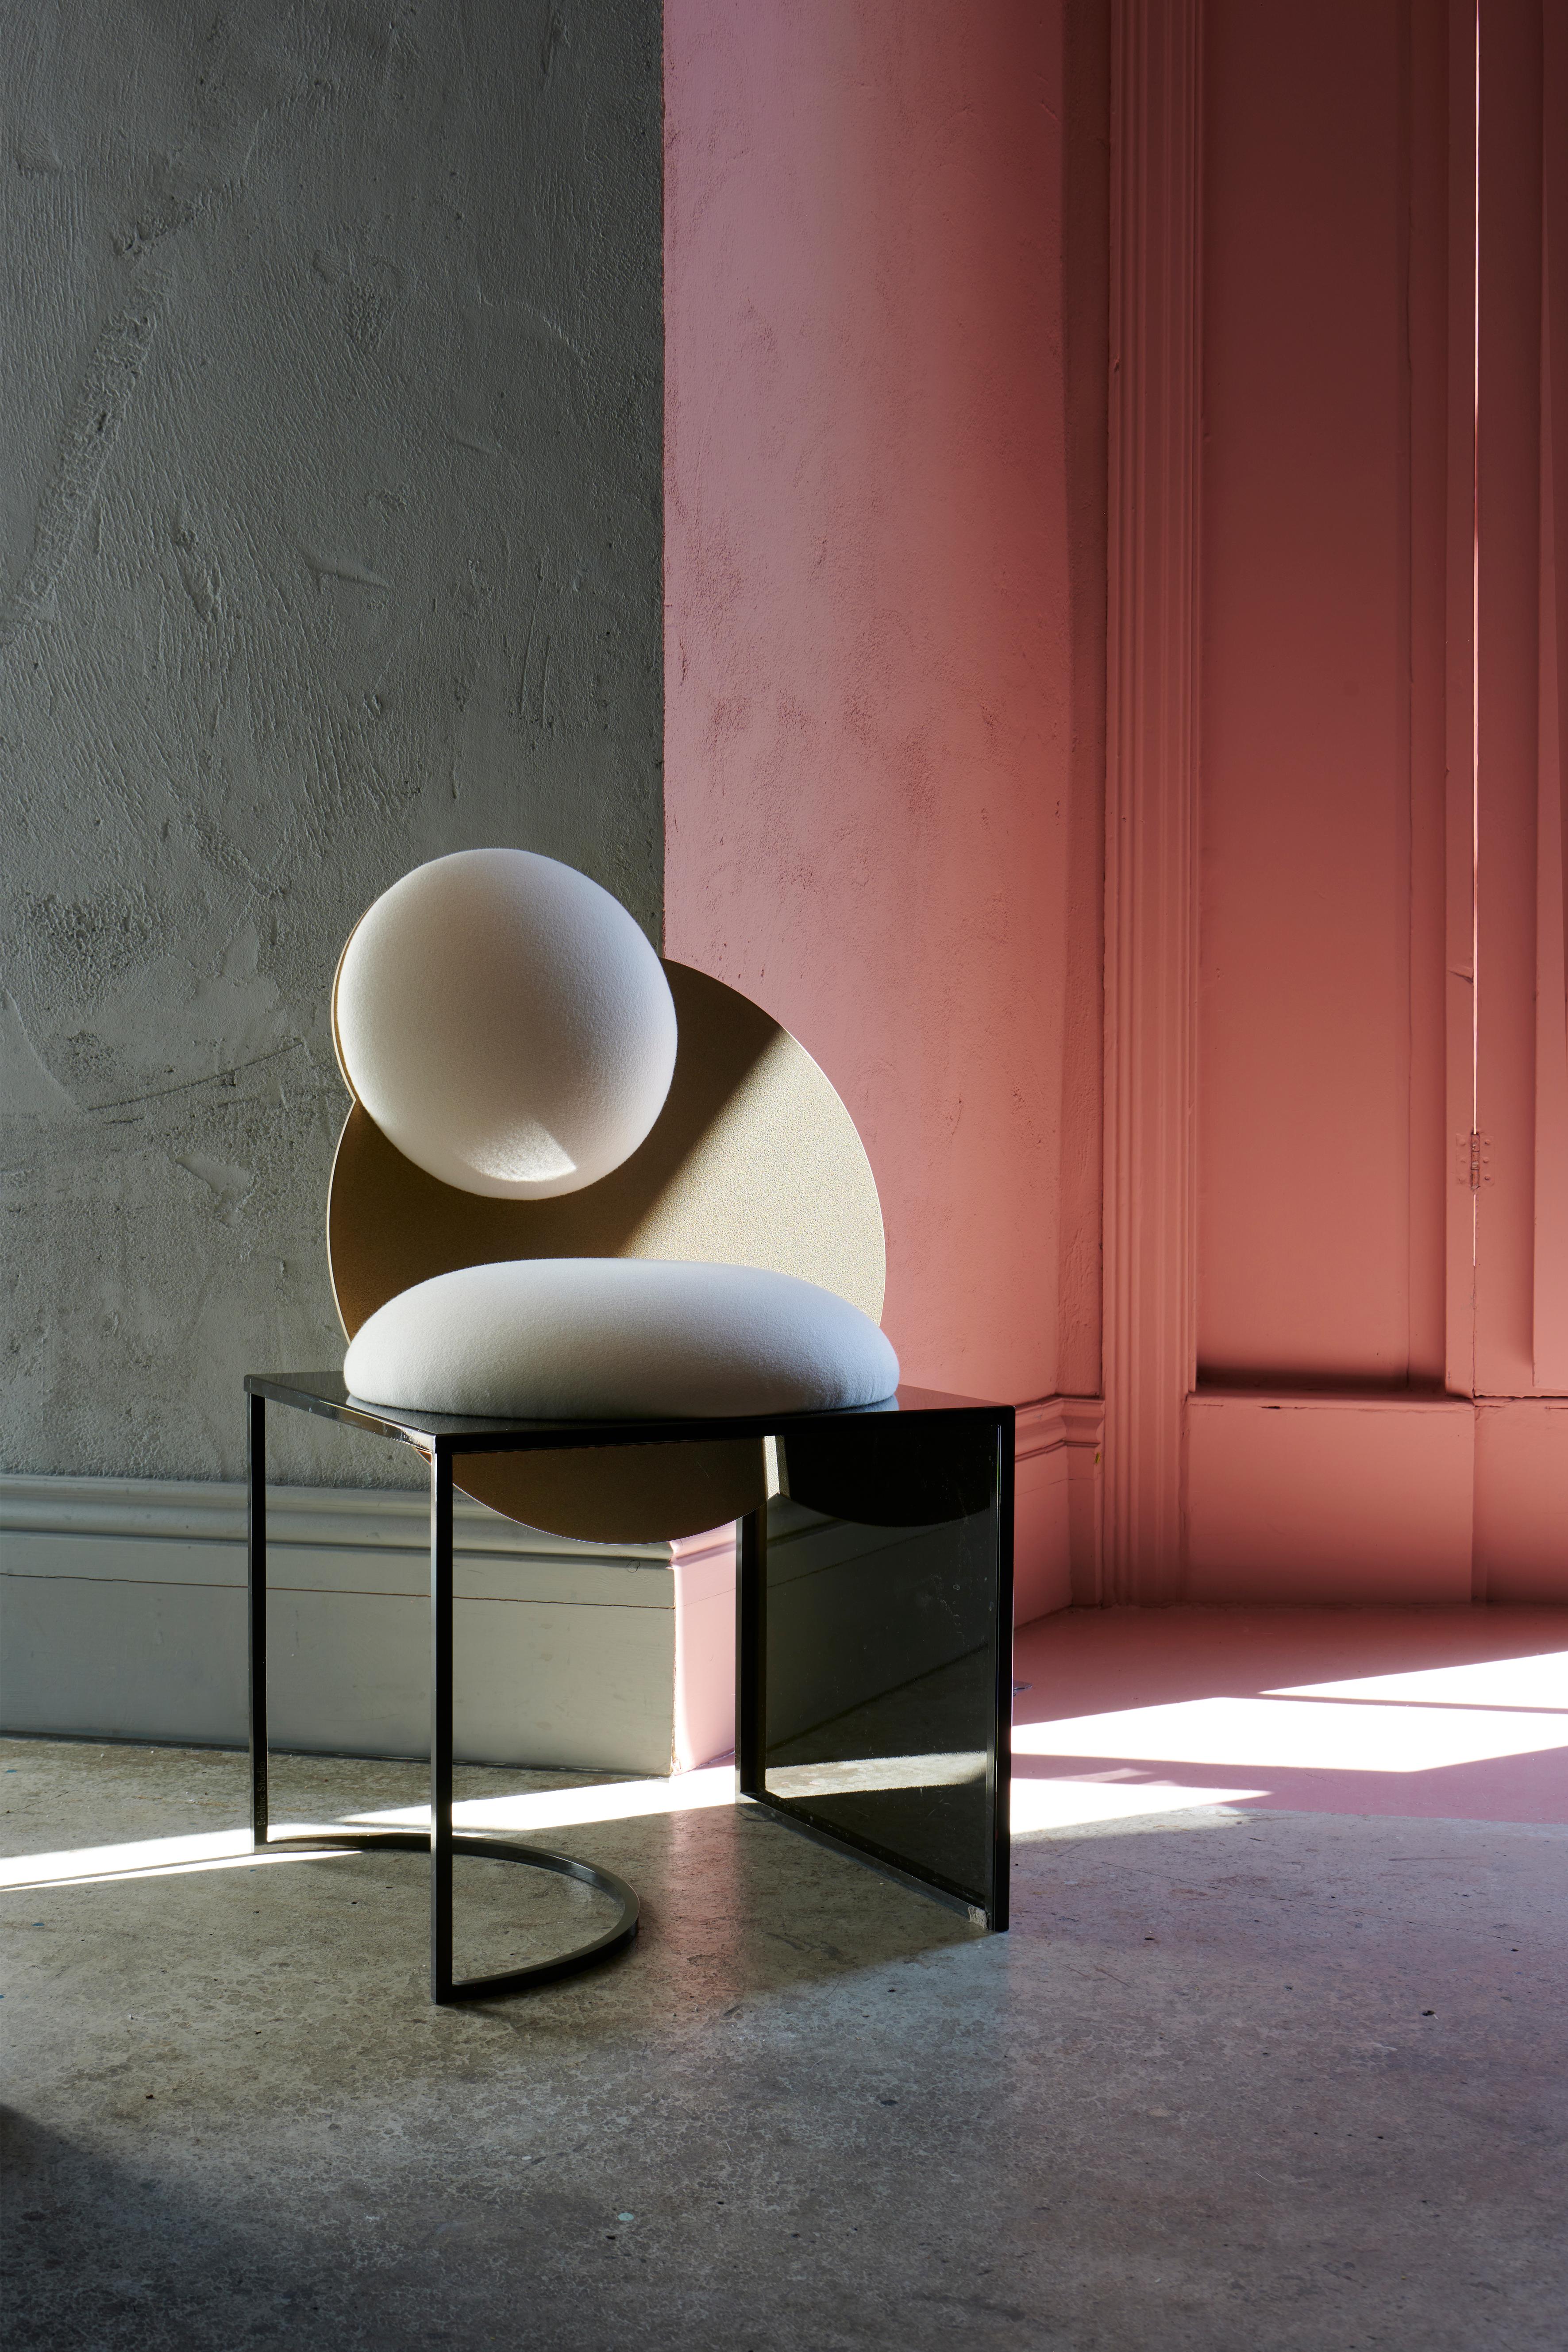 Celeste-Stuhl aus Boucle-Stoff, Messing und mintfarbenem Metall von Lara Bohinc (Wolle) im Angebot